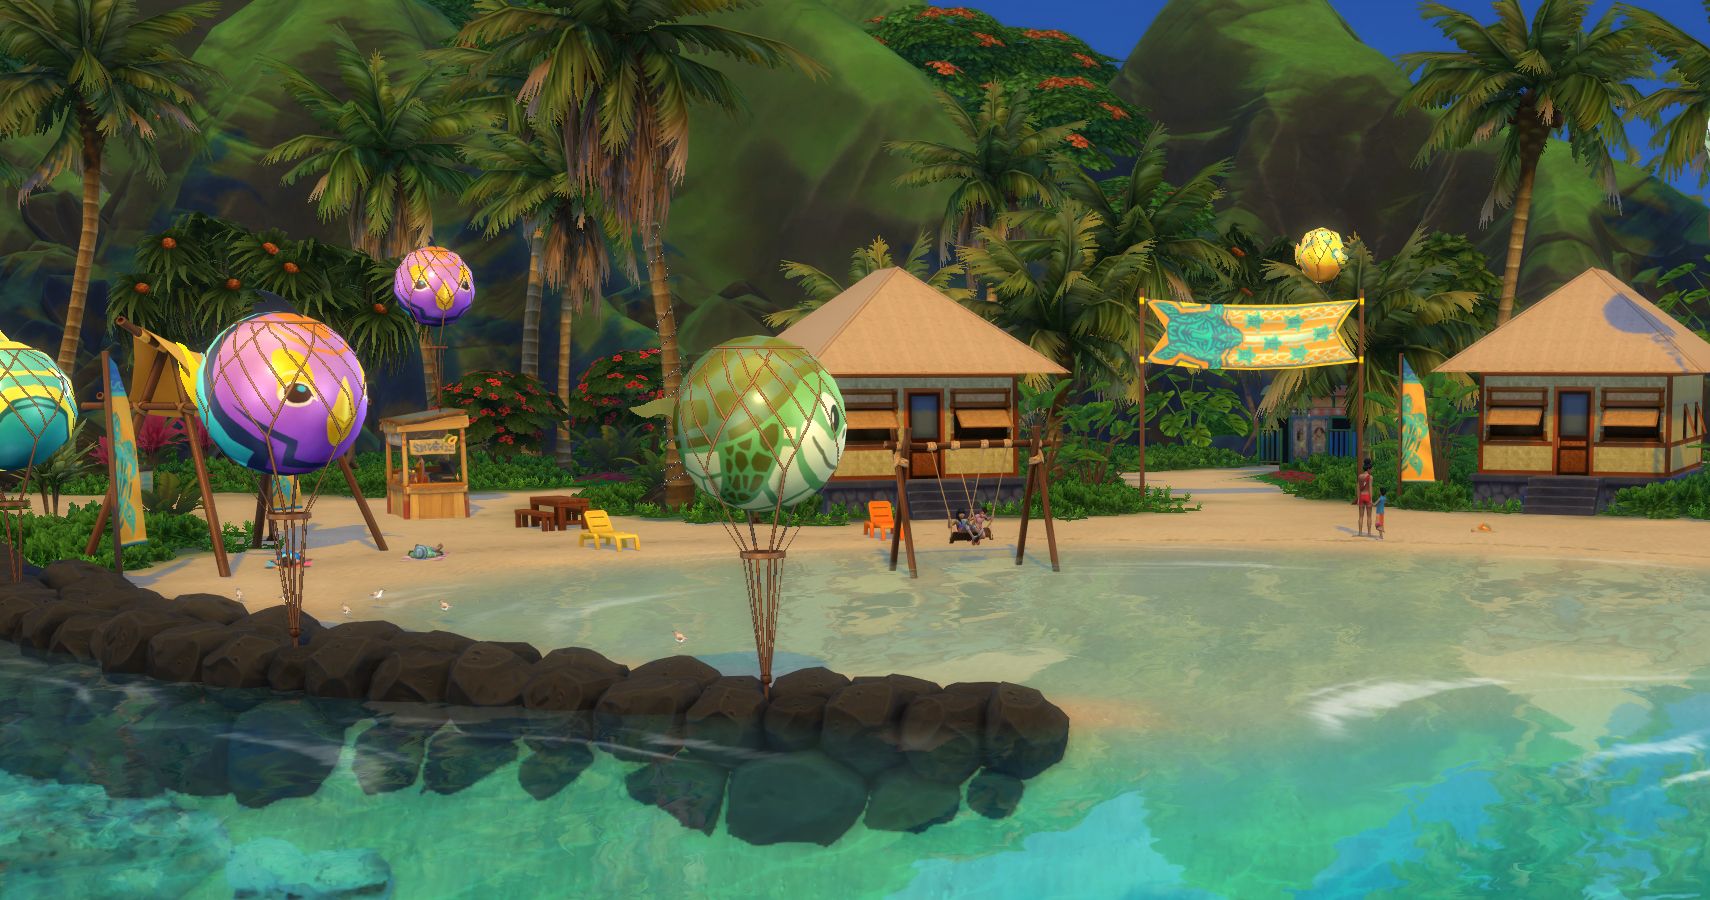 island living sims 4